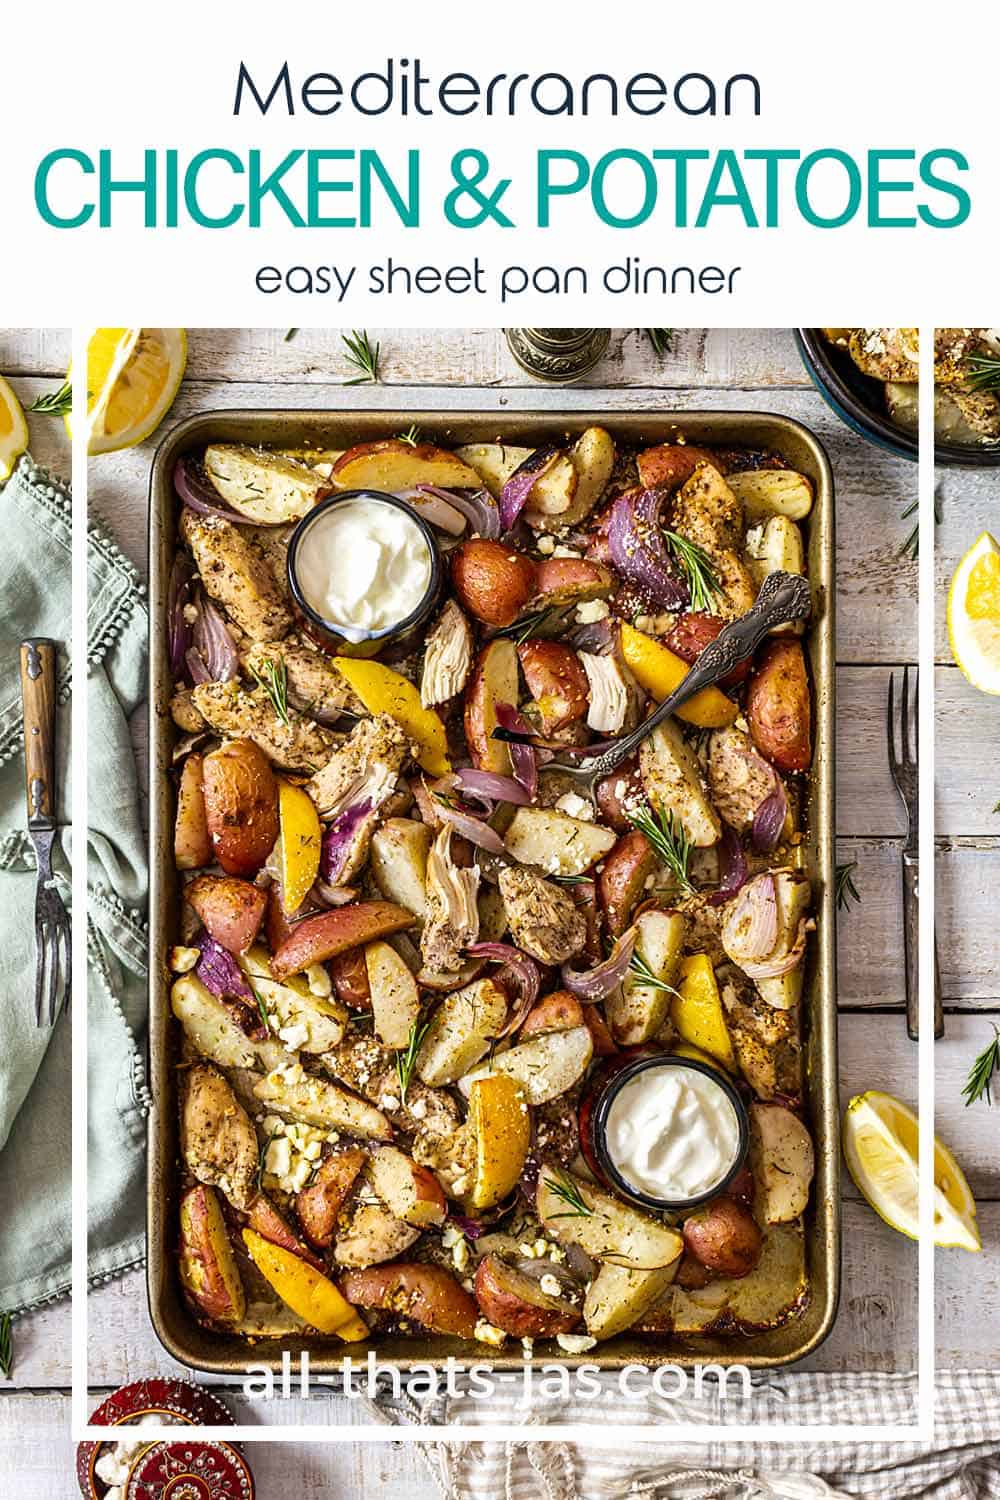 Sheet pan Mediterranean chicken potato dinner with text overlay.